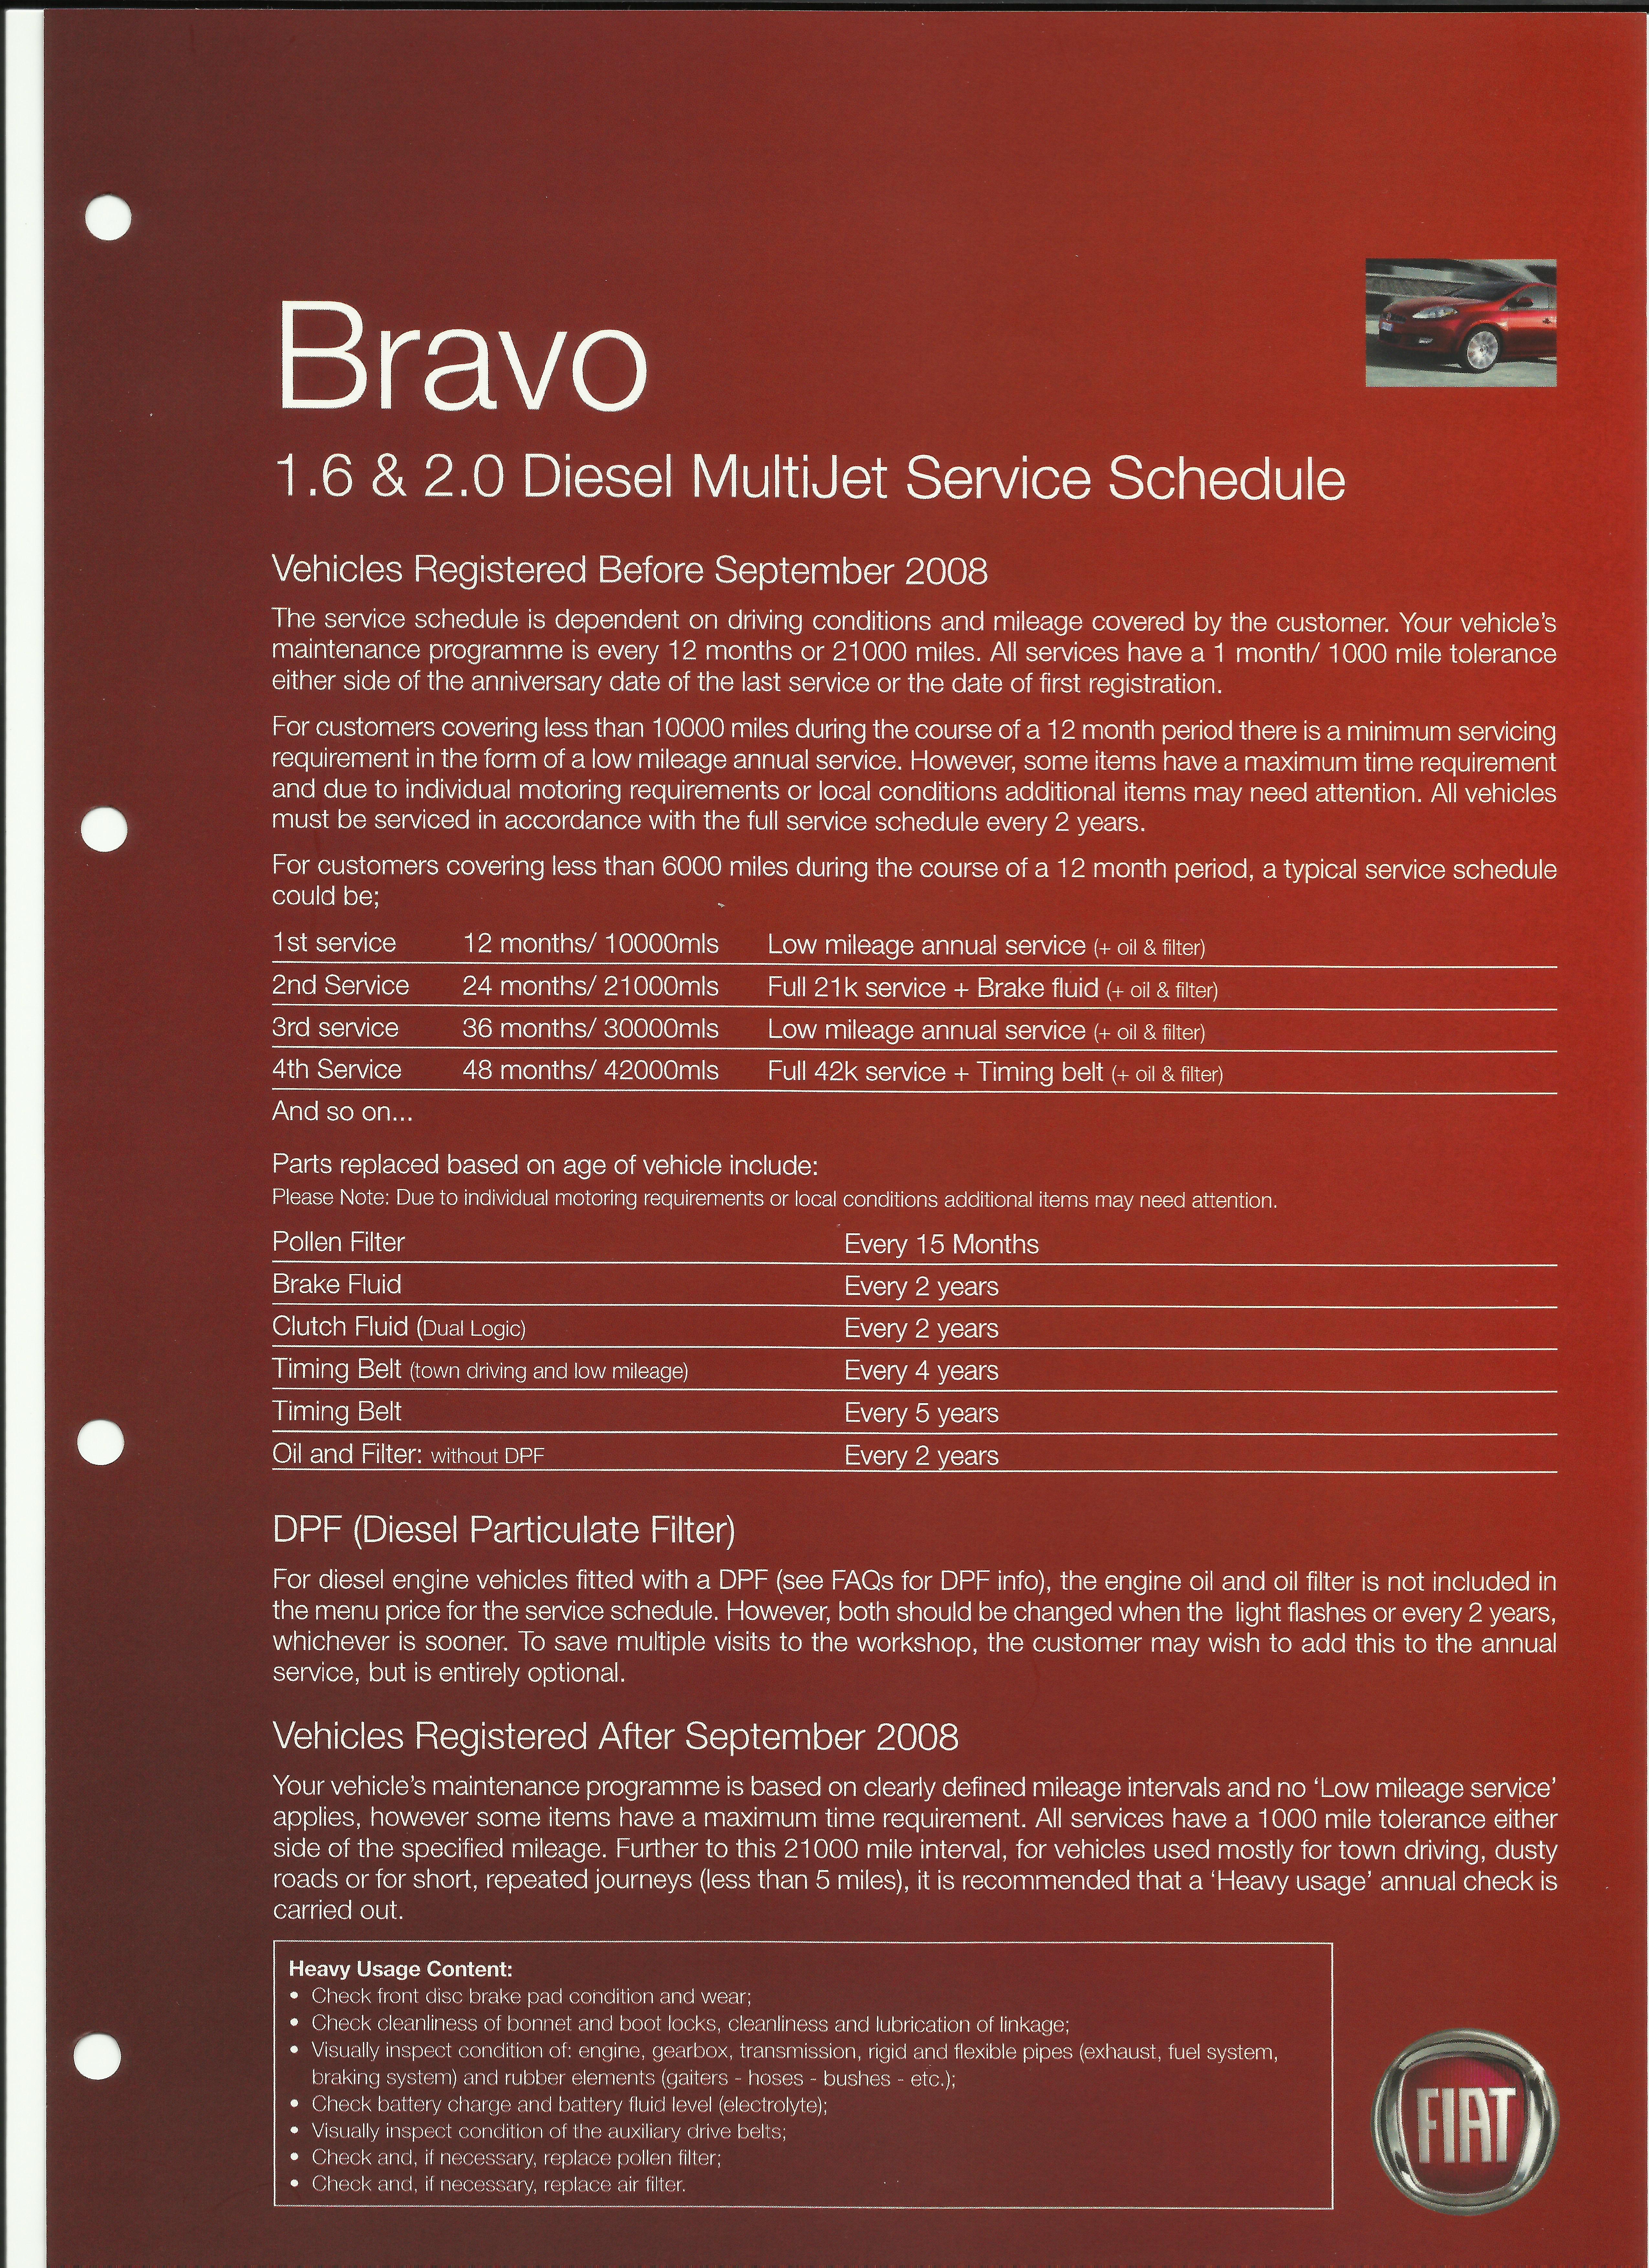 Bravo servicing 3